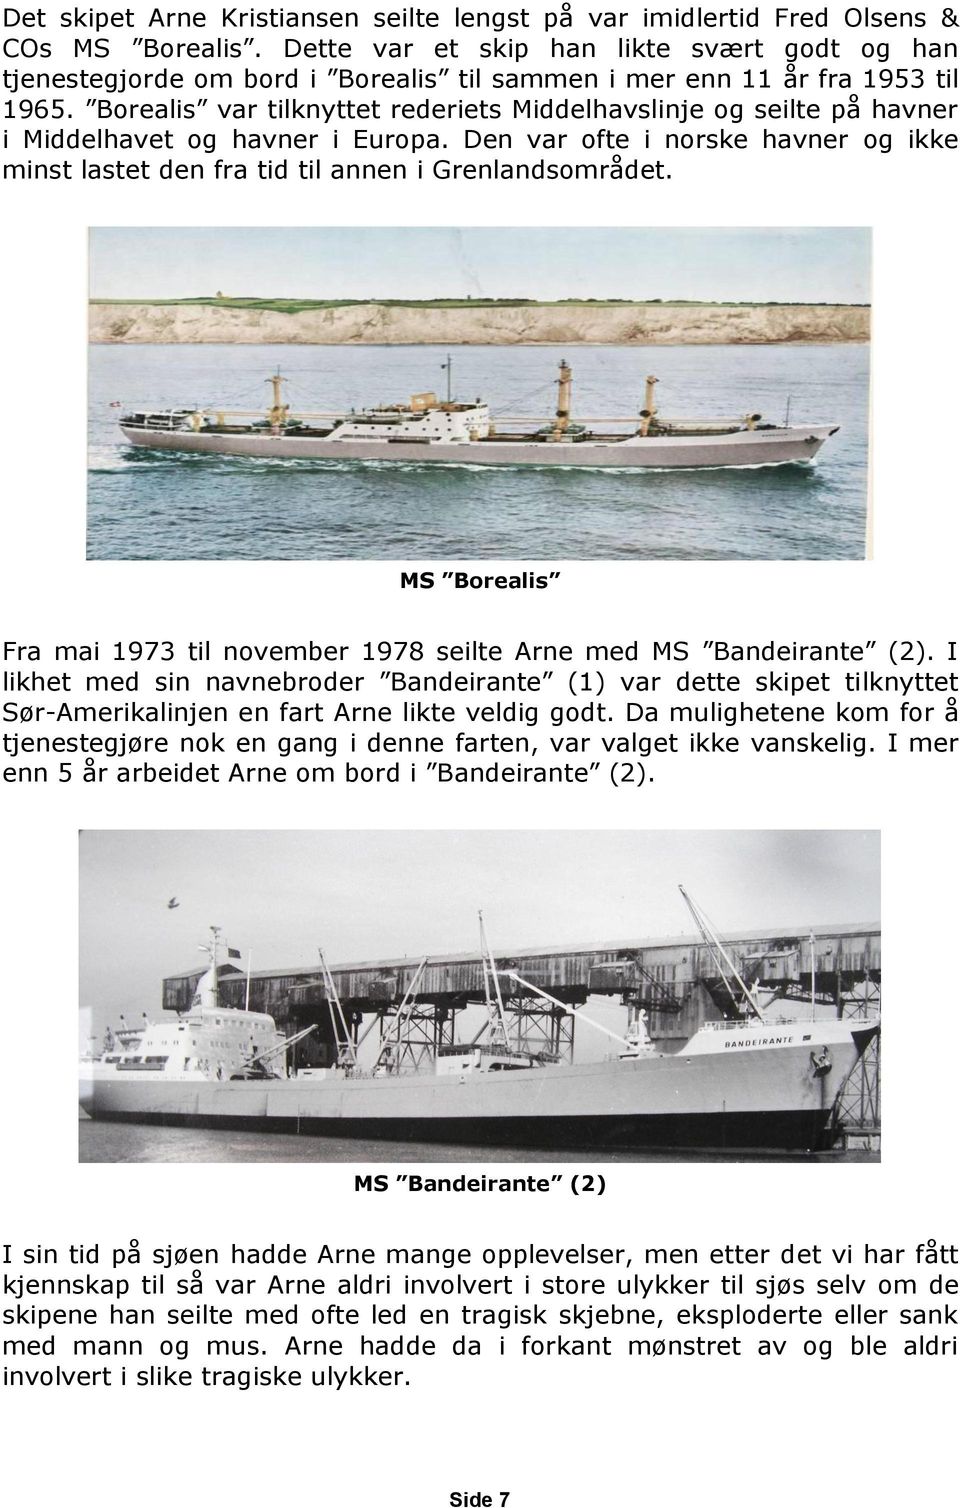 Borealis var tilknyttet rederiets Middelhavslinje og seilte på havner i Middelhavet og havner i Europa. Den var ofte i norske havner og ikke minst lastet den fra tid til annen i Grenlandsområdet.